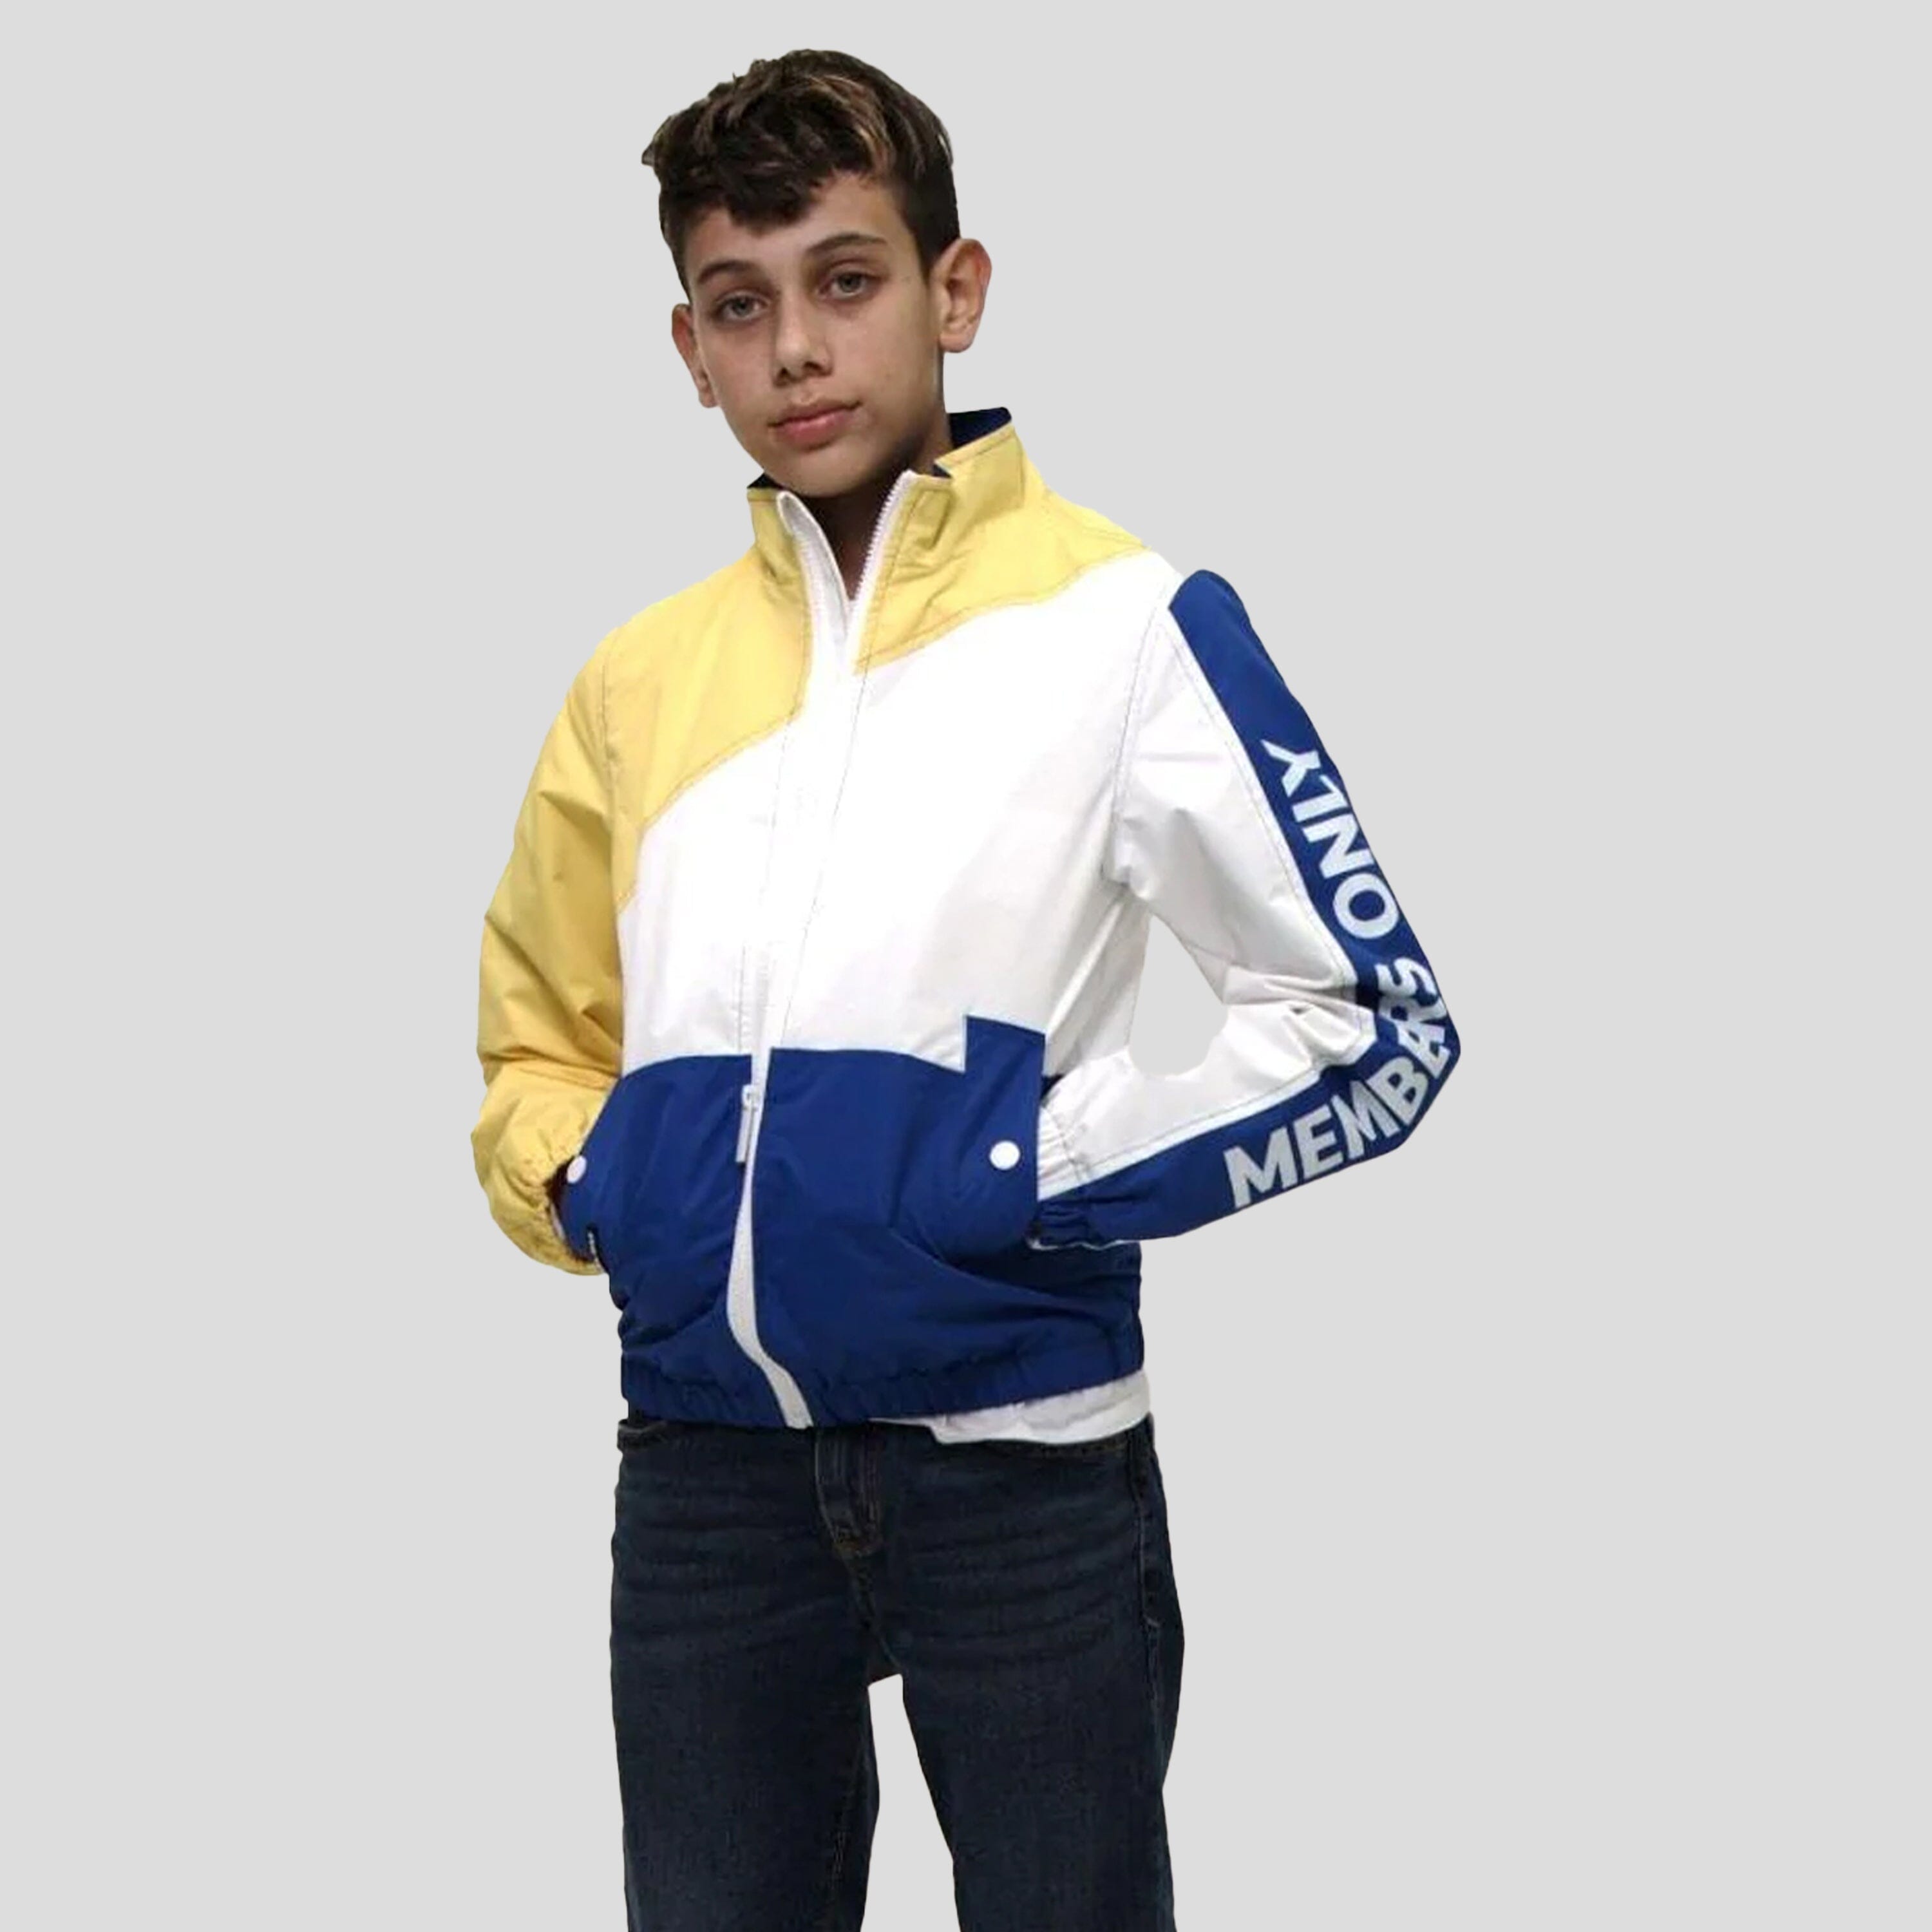 Boy's Nautical Color Block Jacket - FINAL SALE Boy's Jacket Members Only 